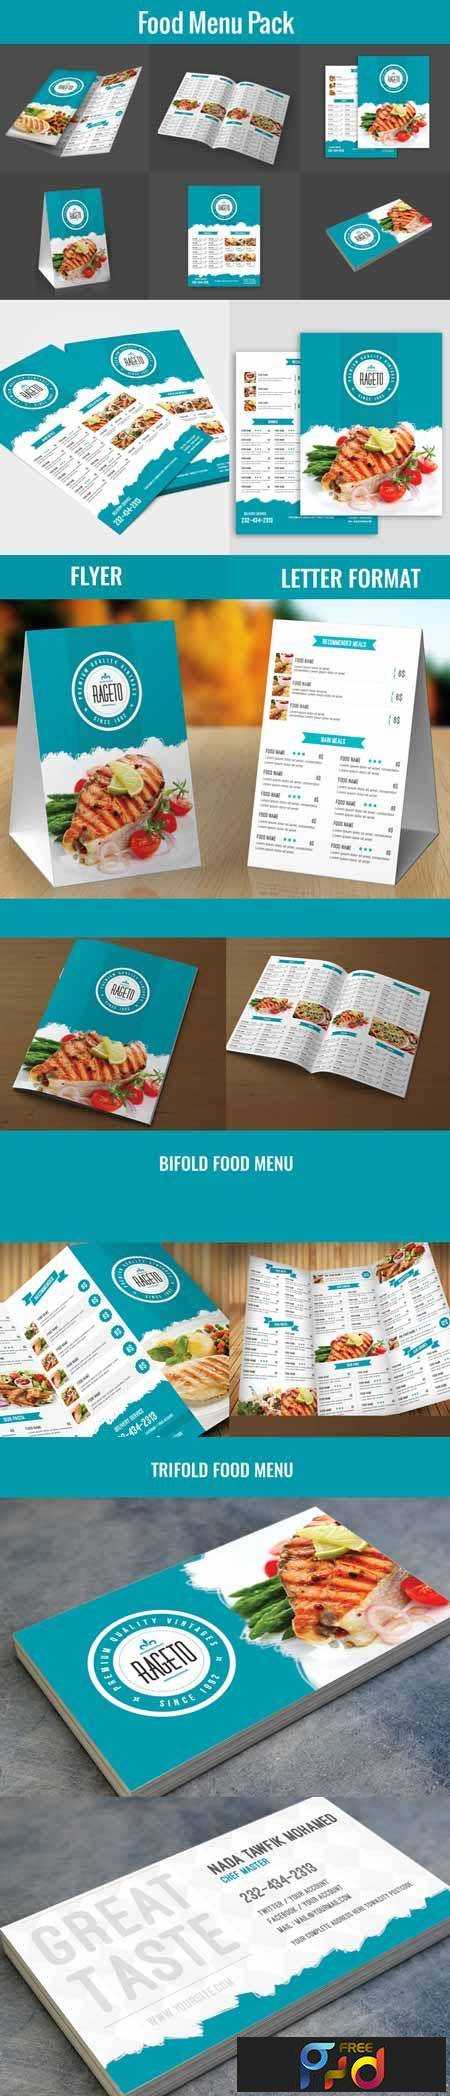 freepsdvn-com_1442609188_food-menu-pack-369159